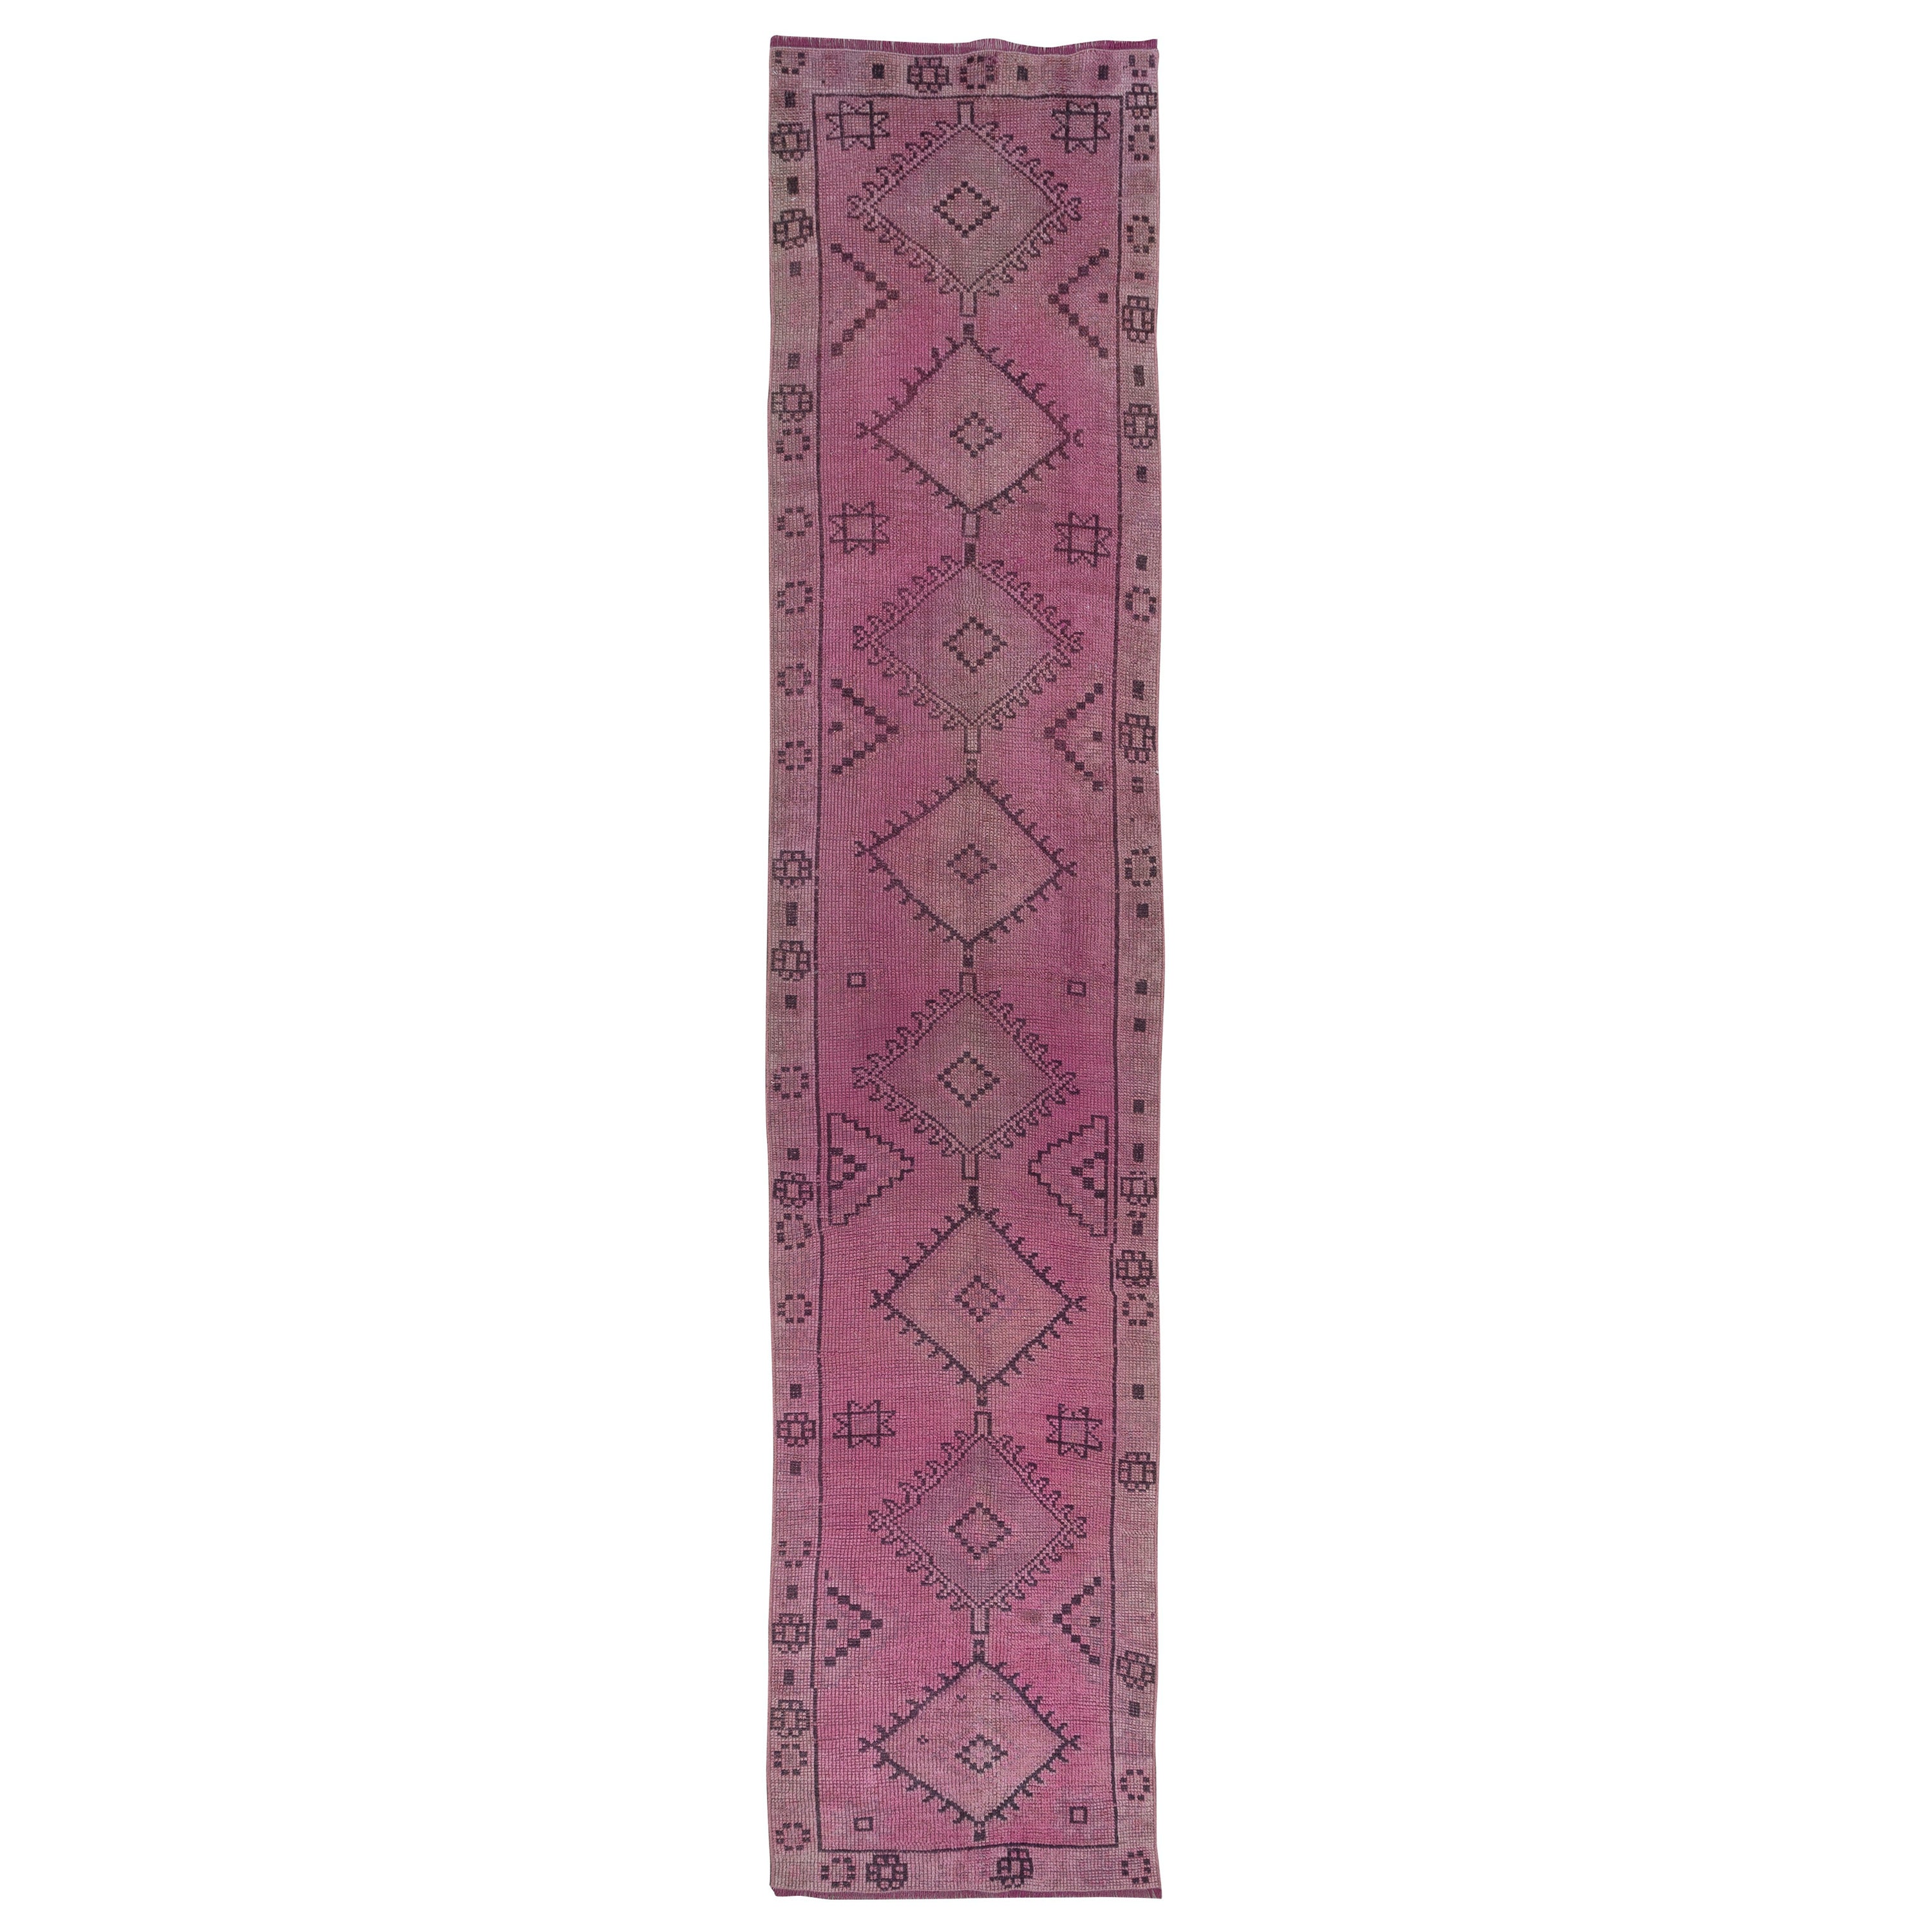 2.8x12.5 Ft Handmade Pink Runner Rug for Hallway, Modern Turkish Corridor Carpet (tapis de couloir turc moderne)